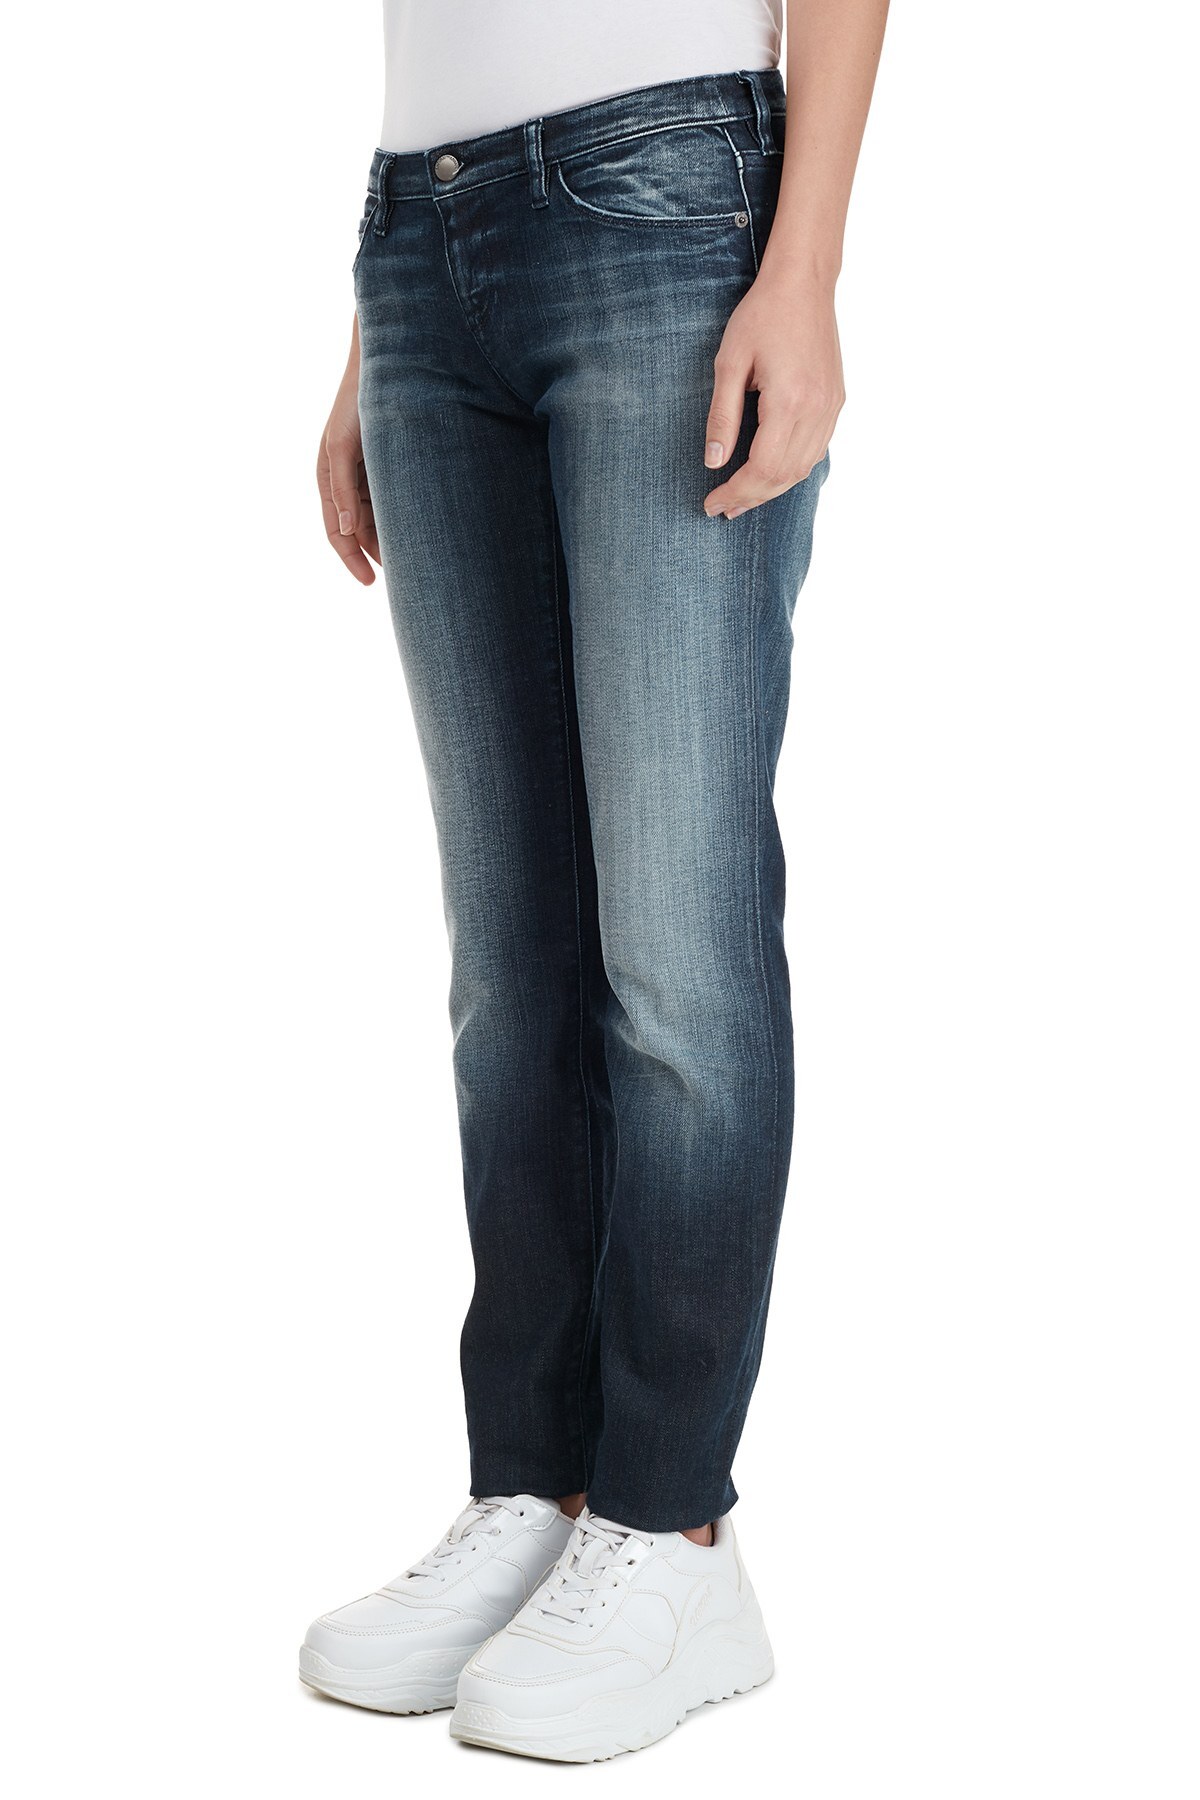 Emporio Armani Düşük Bel Skinny Pamuklu J06 Jeans Bayan Kot Pantolon 6H2J06 2DB5Z 0941 LACİVERT